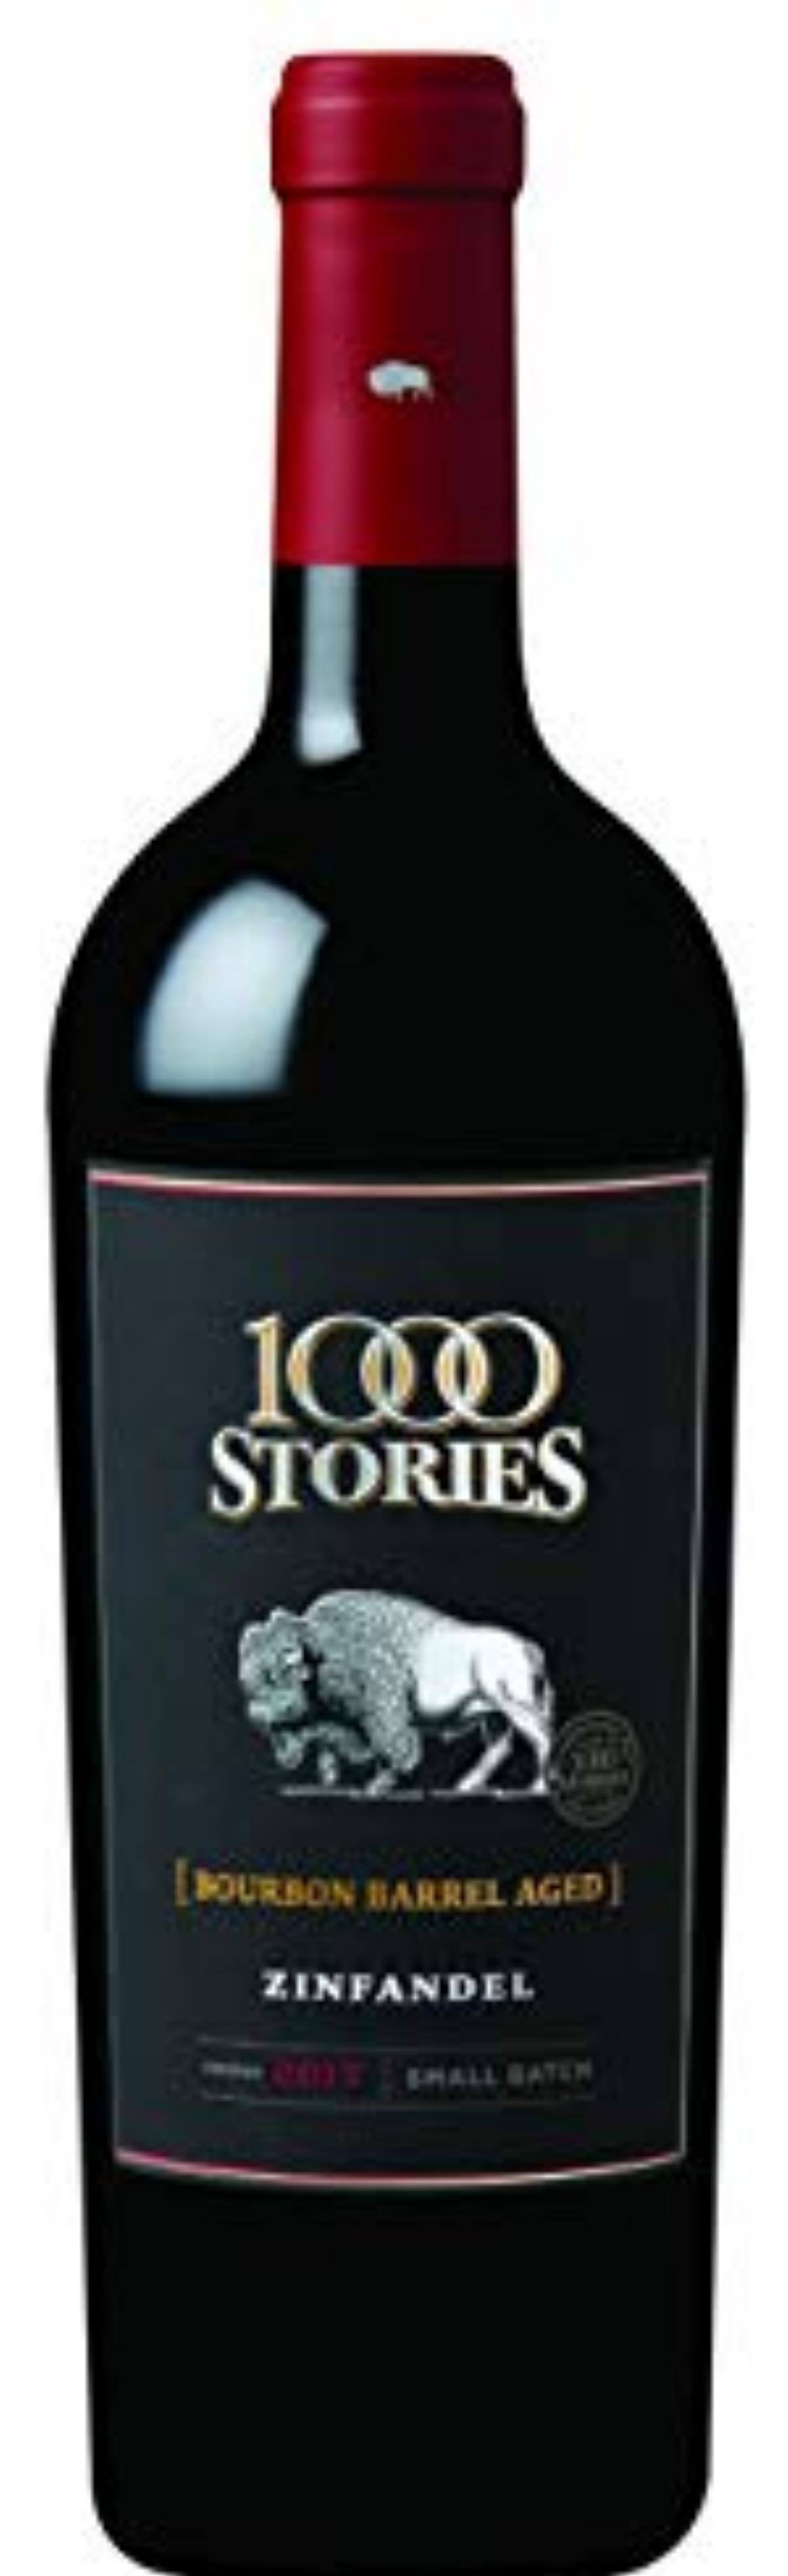 1000 Stories Zinfandel - California, USA